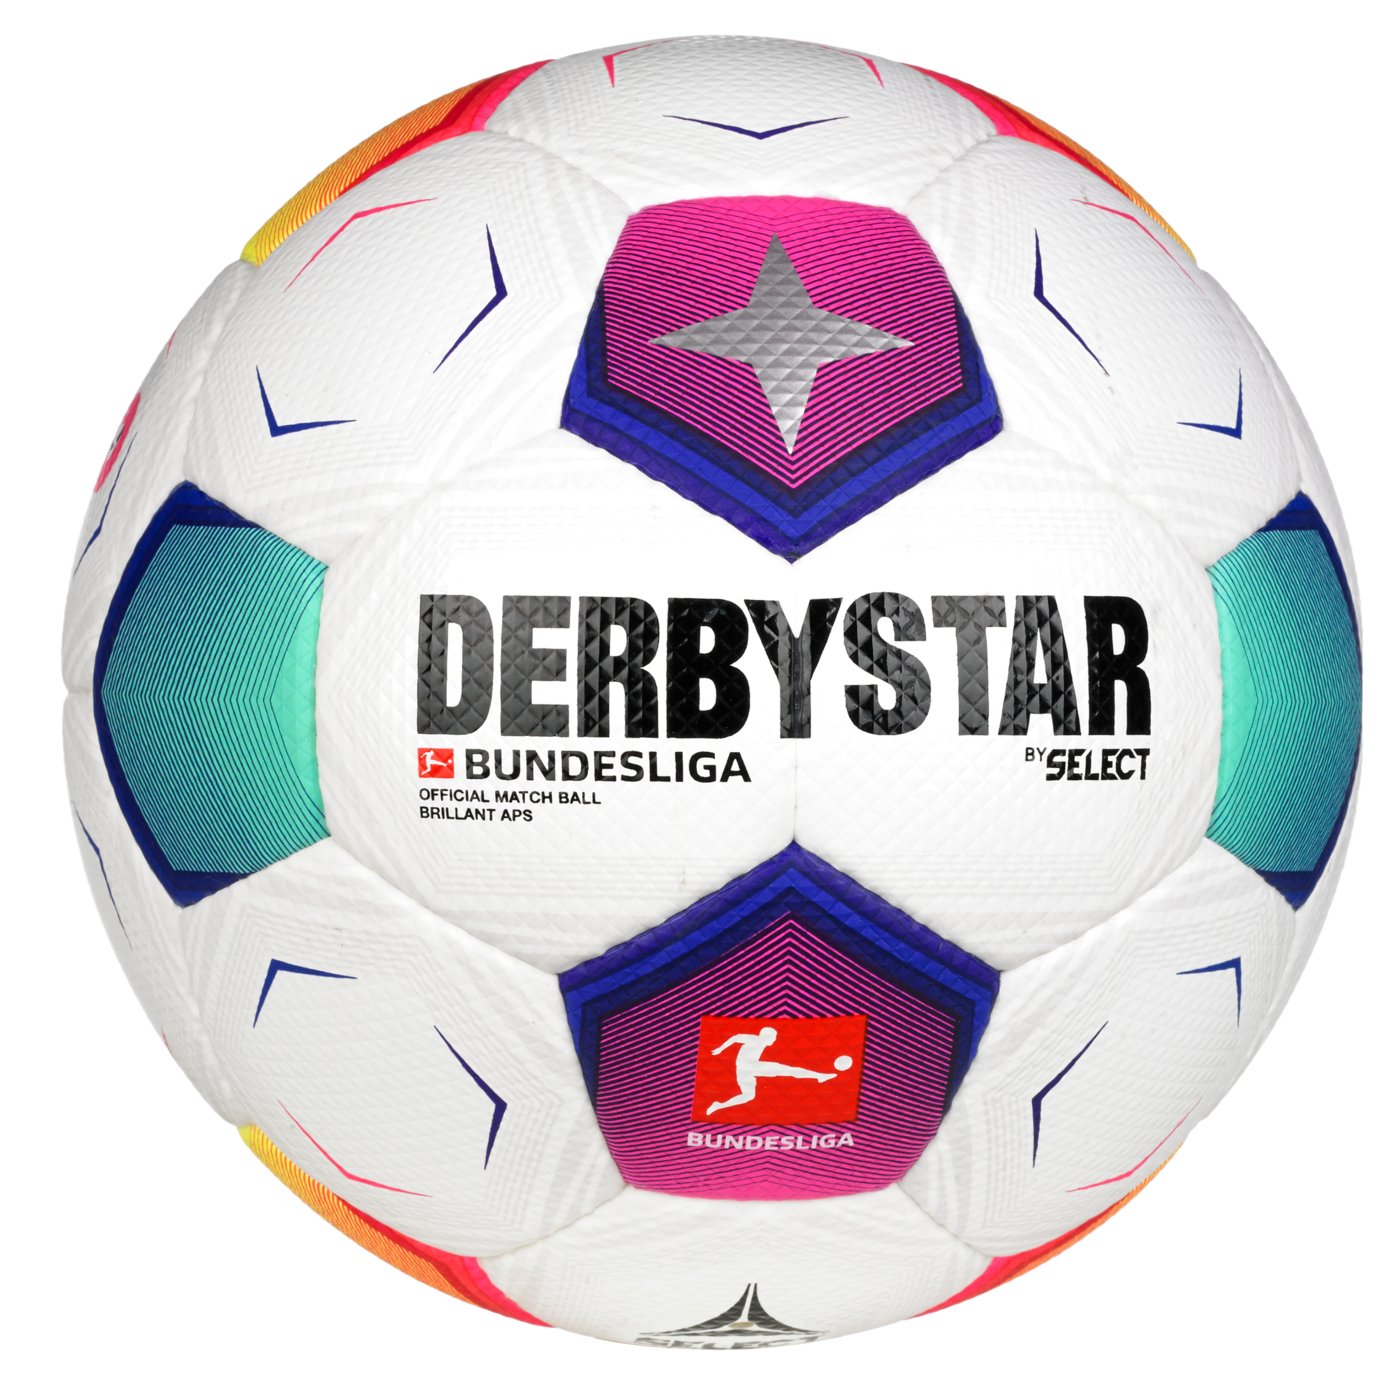 М'яч футбольний SELECT DERBYSTAR Bundesliga Brillant APS v23 (634) біло/син/фіолет, 5, 5